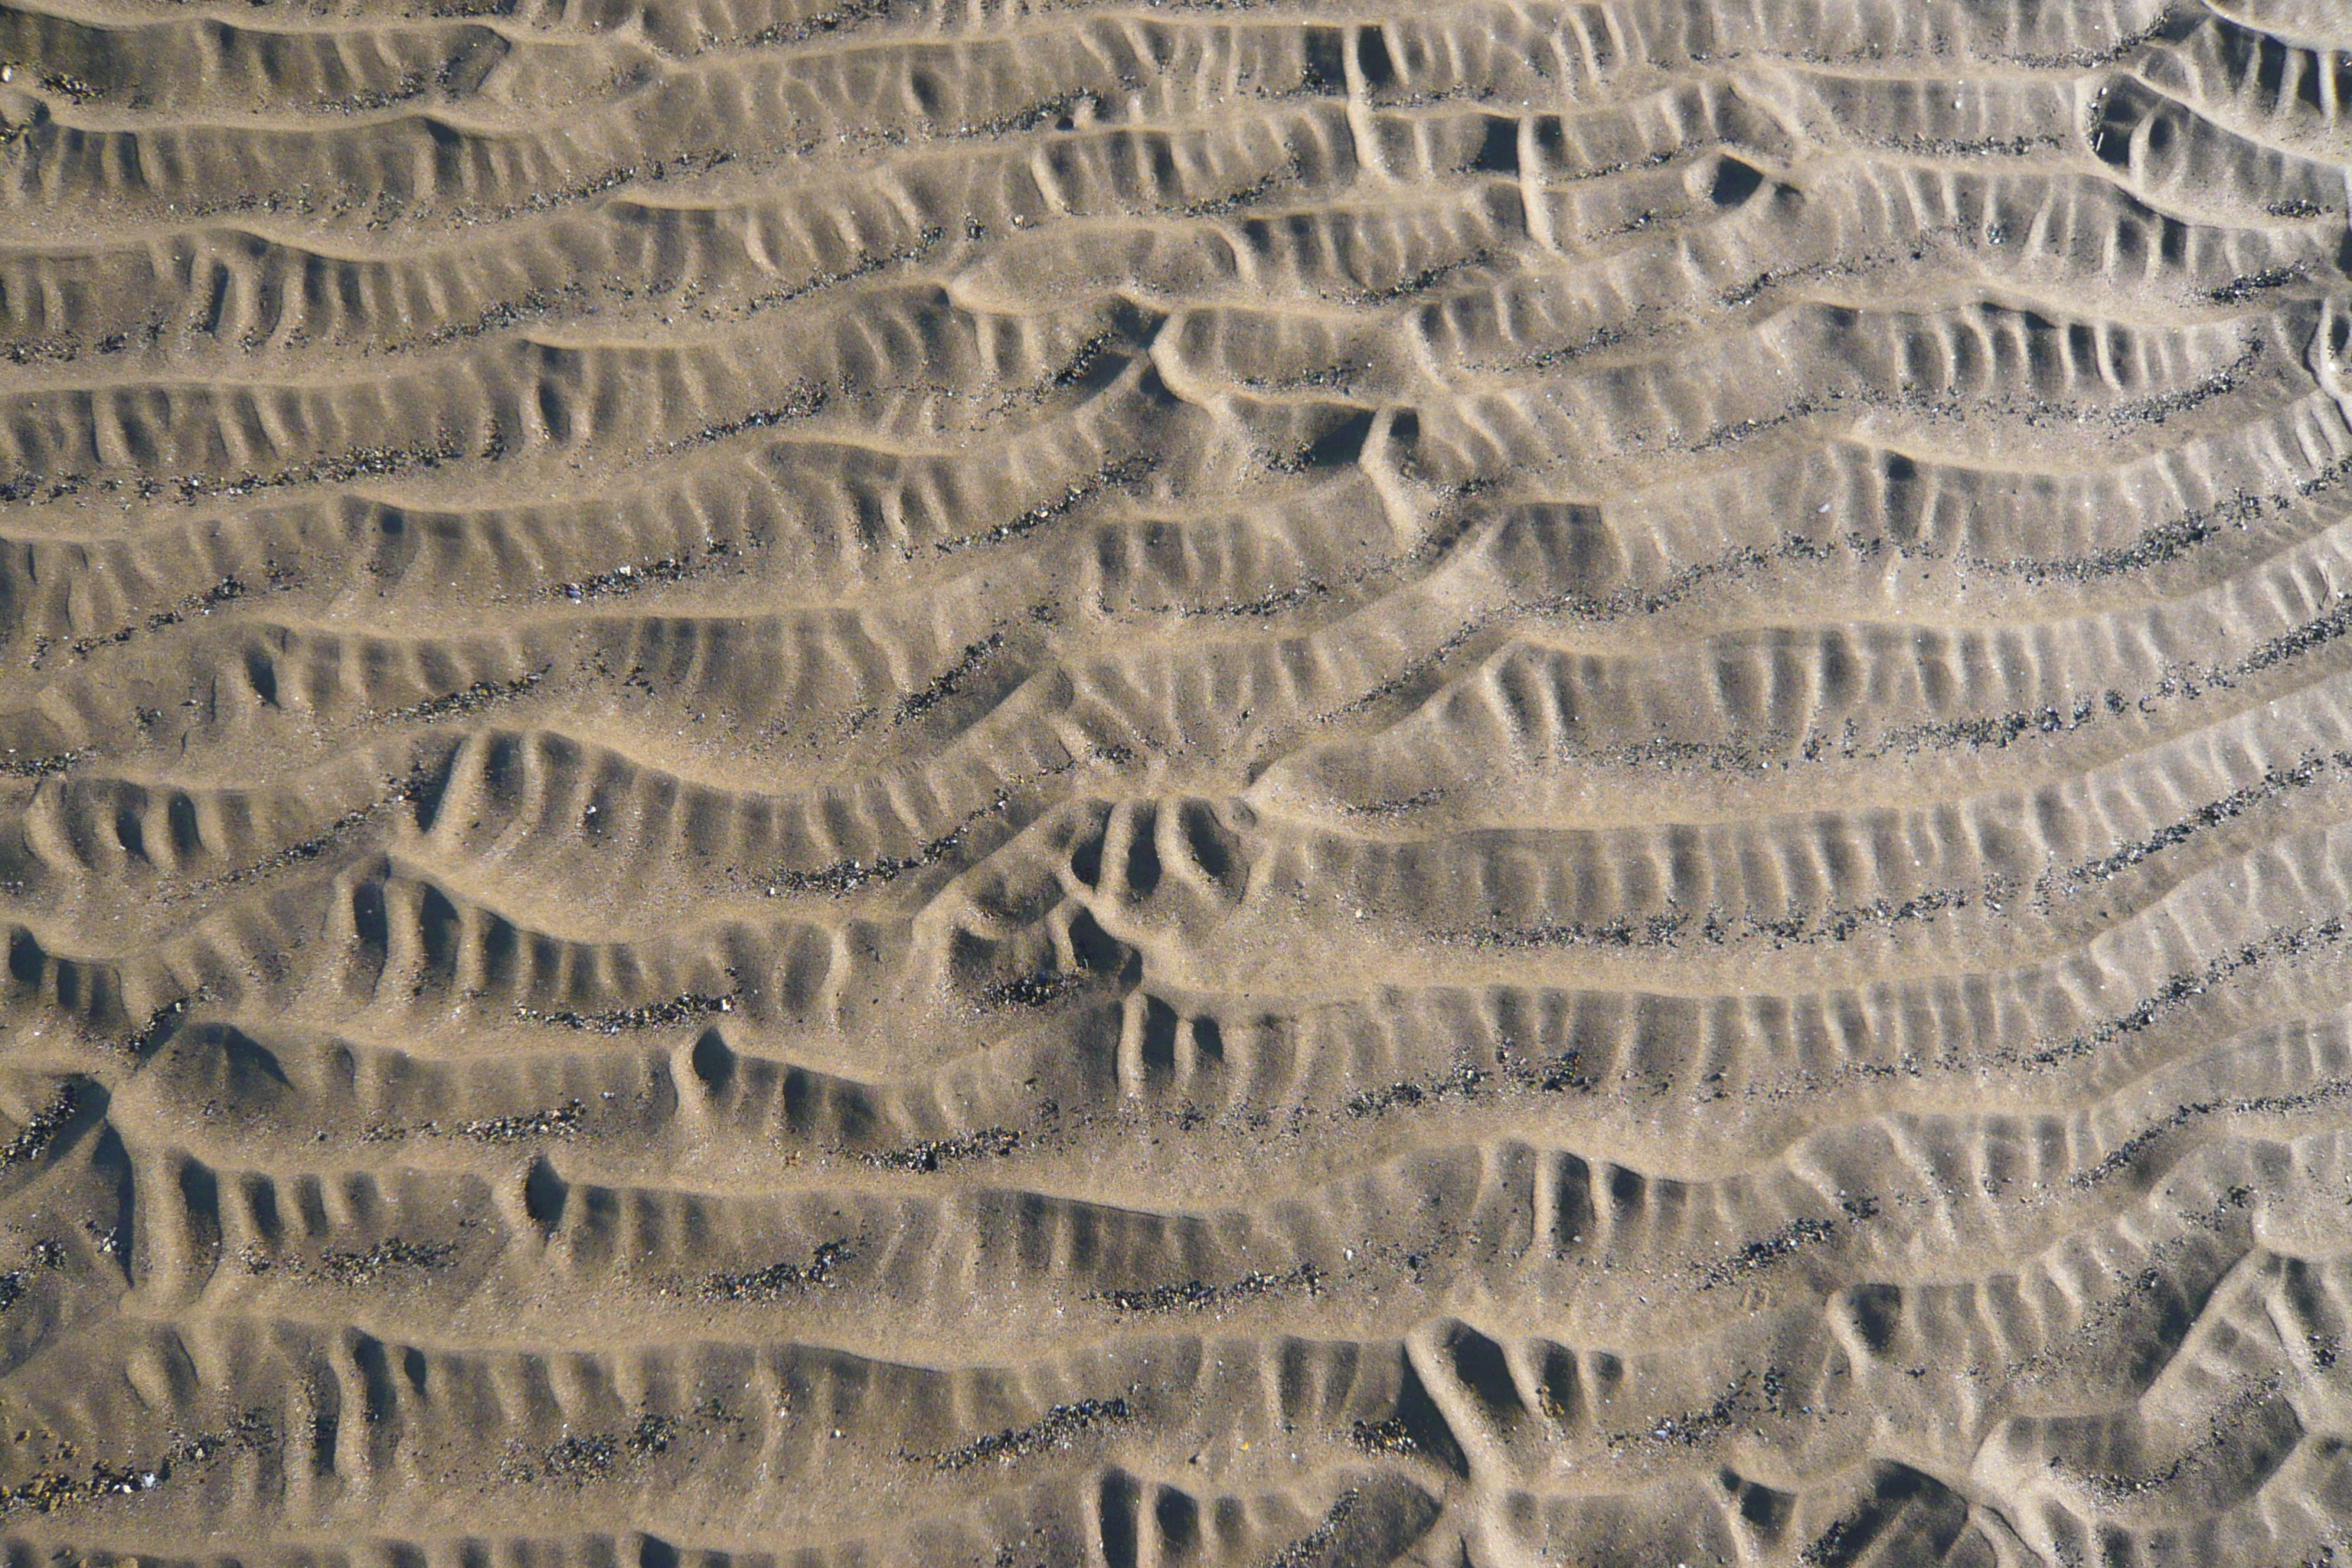 File:Sand patterns (2270226964).jpg - Wikimedia Commons